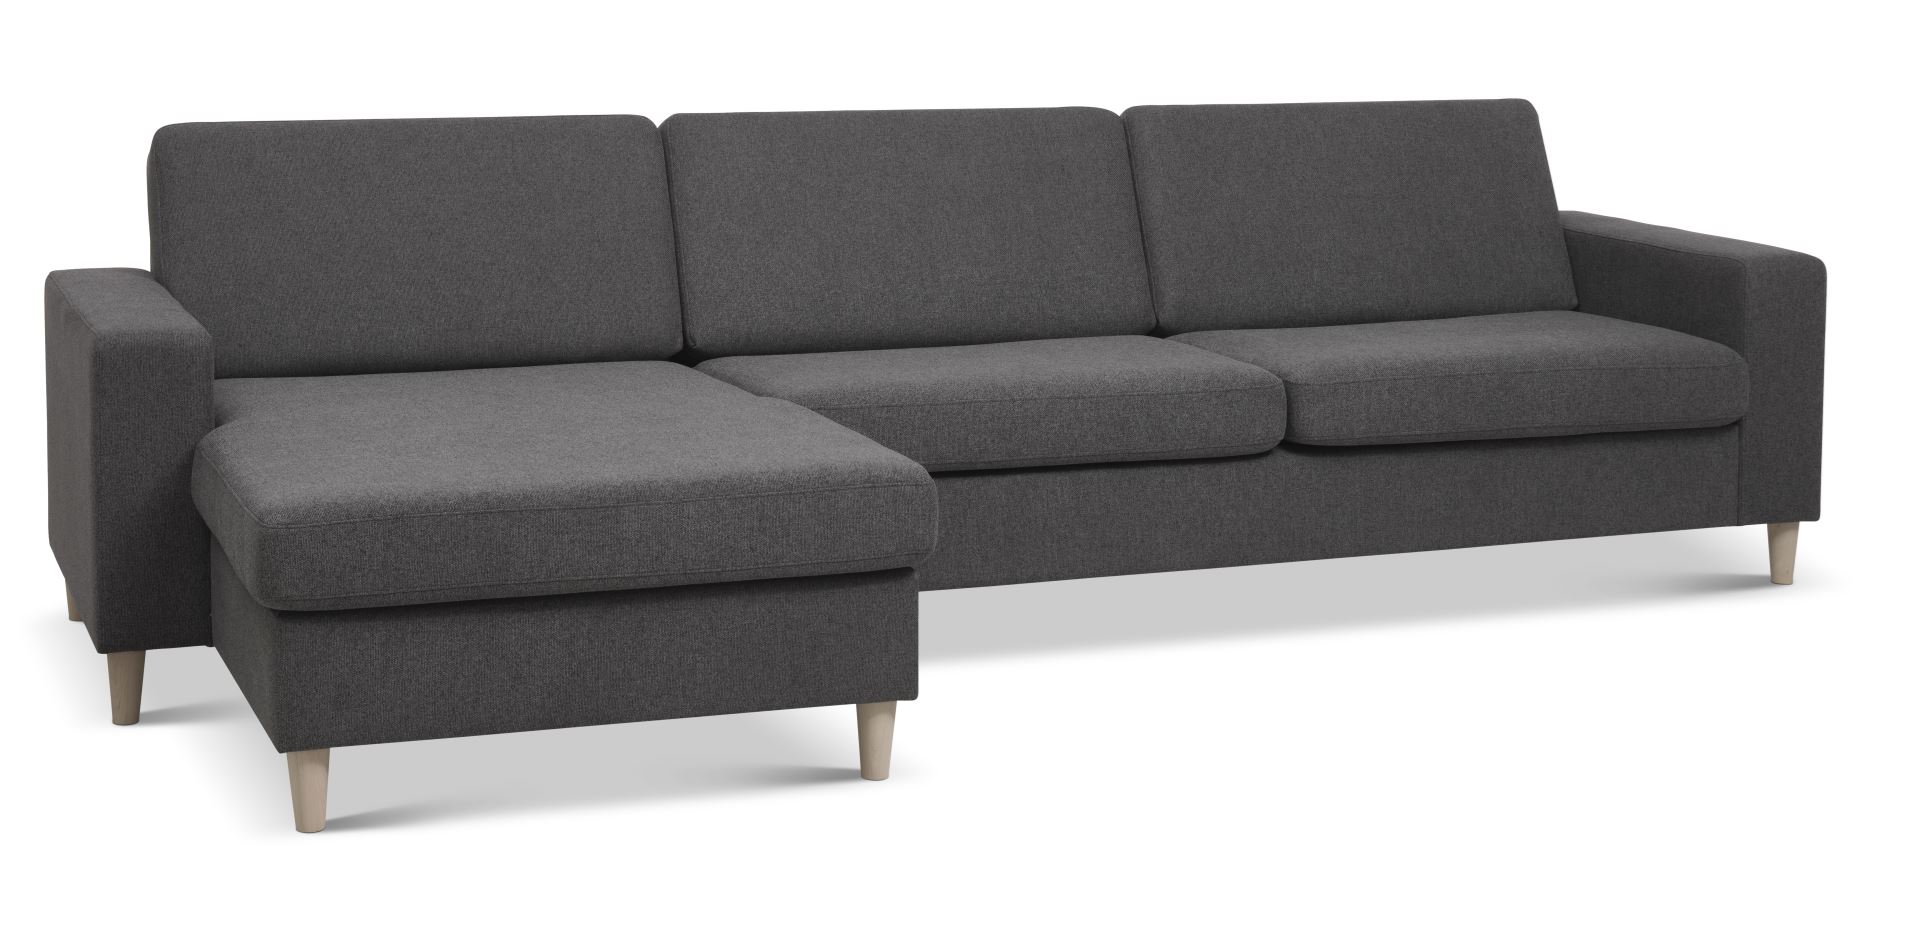 Pan set 8 3D XL sofa, m. chaiselong - antracitgrå polyester stof og natur træ